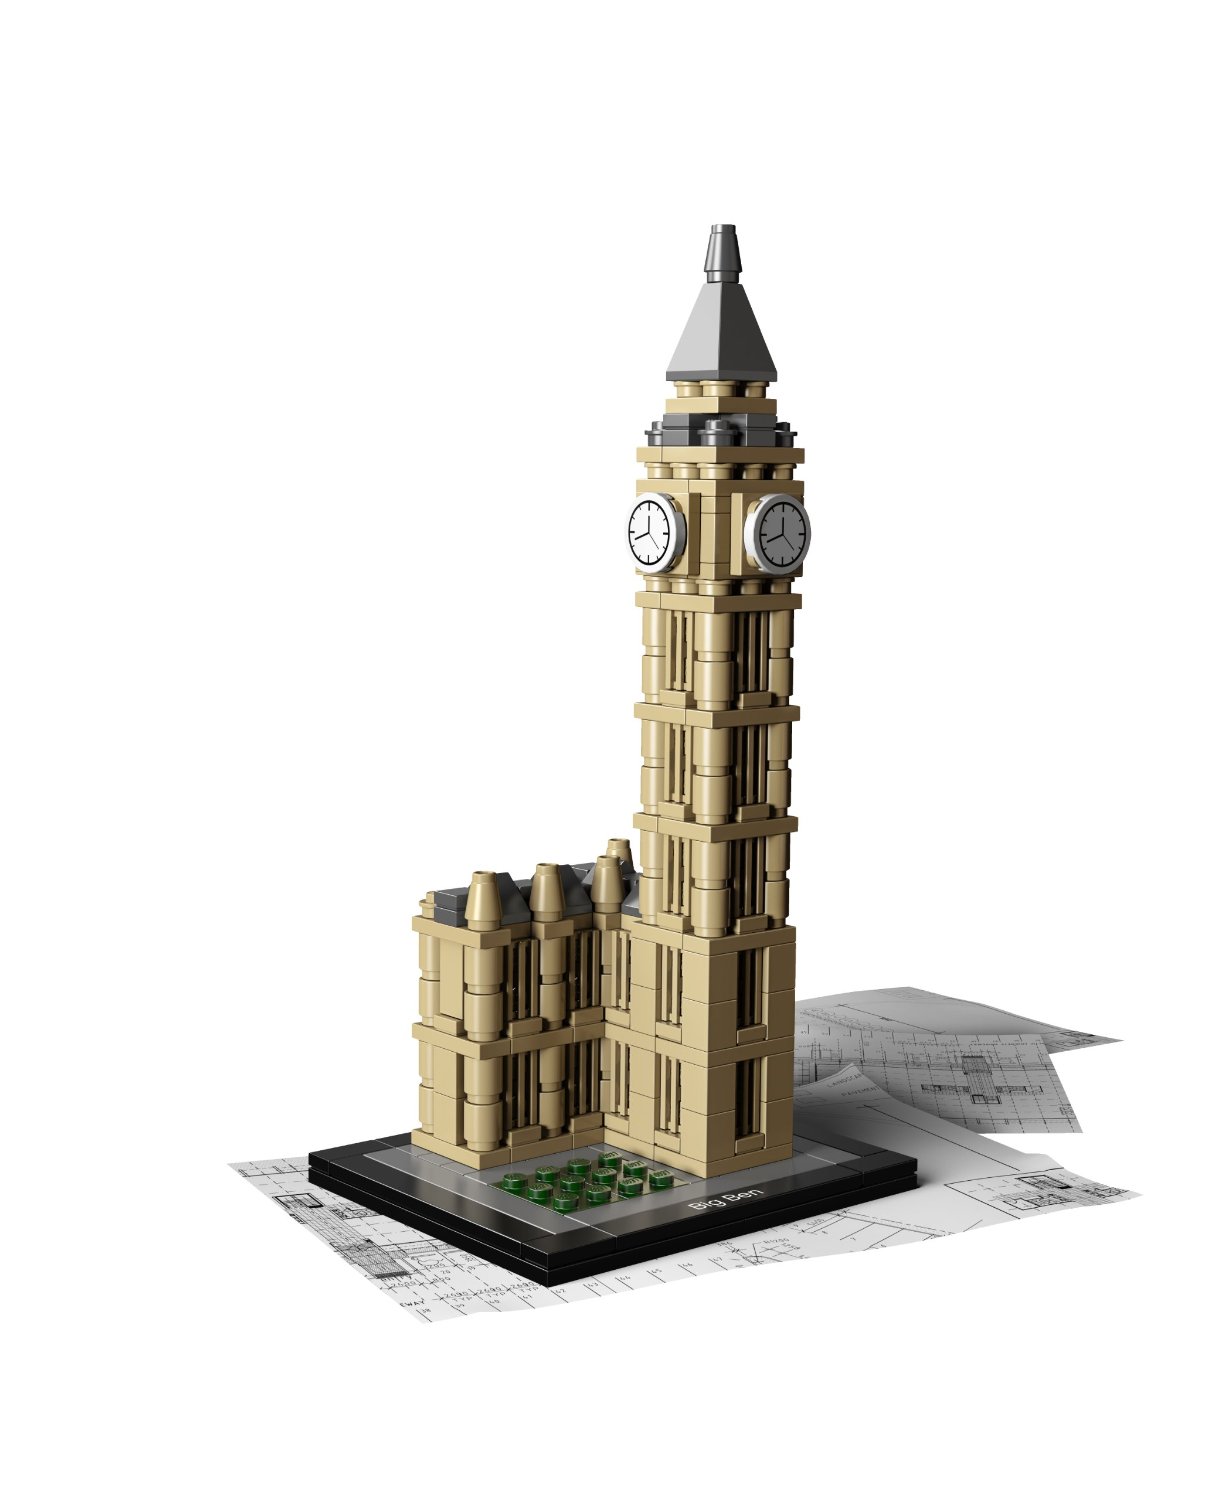 LEGO ARCHITECTURE LONDON BIG BEN 4